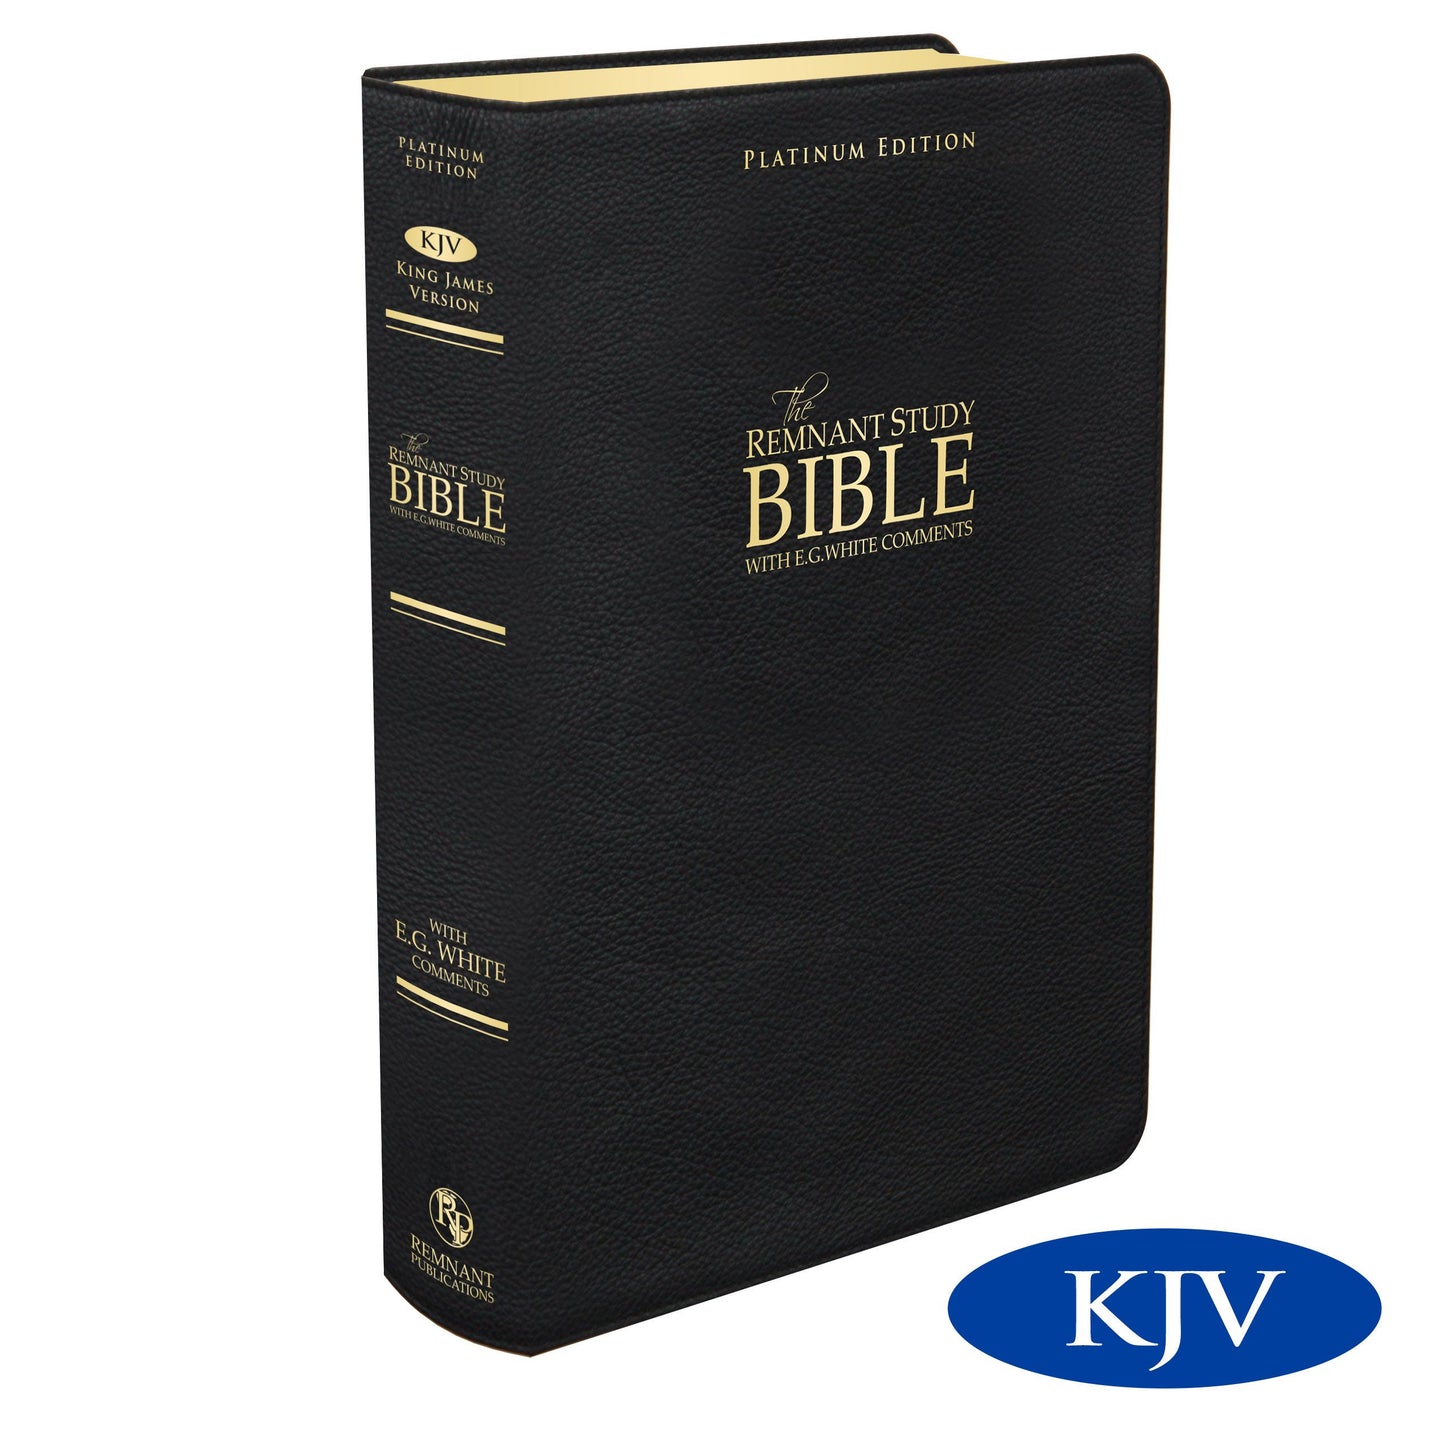 Platinum Remnant Study Bible KJV (Genuine Top-grain Leather Black)